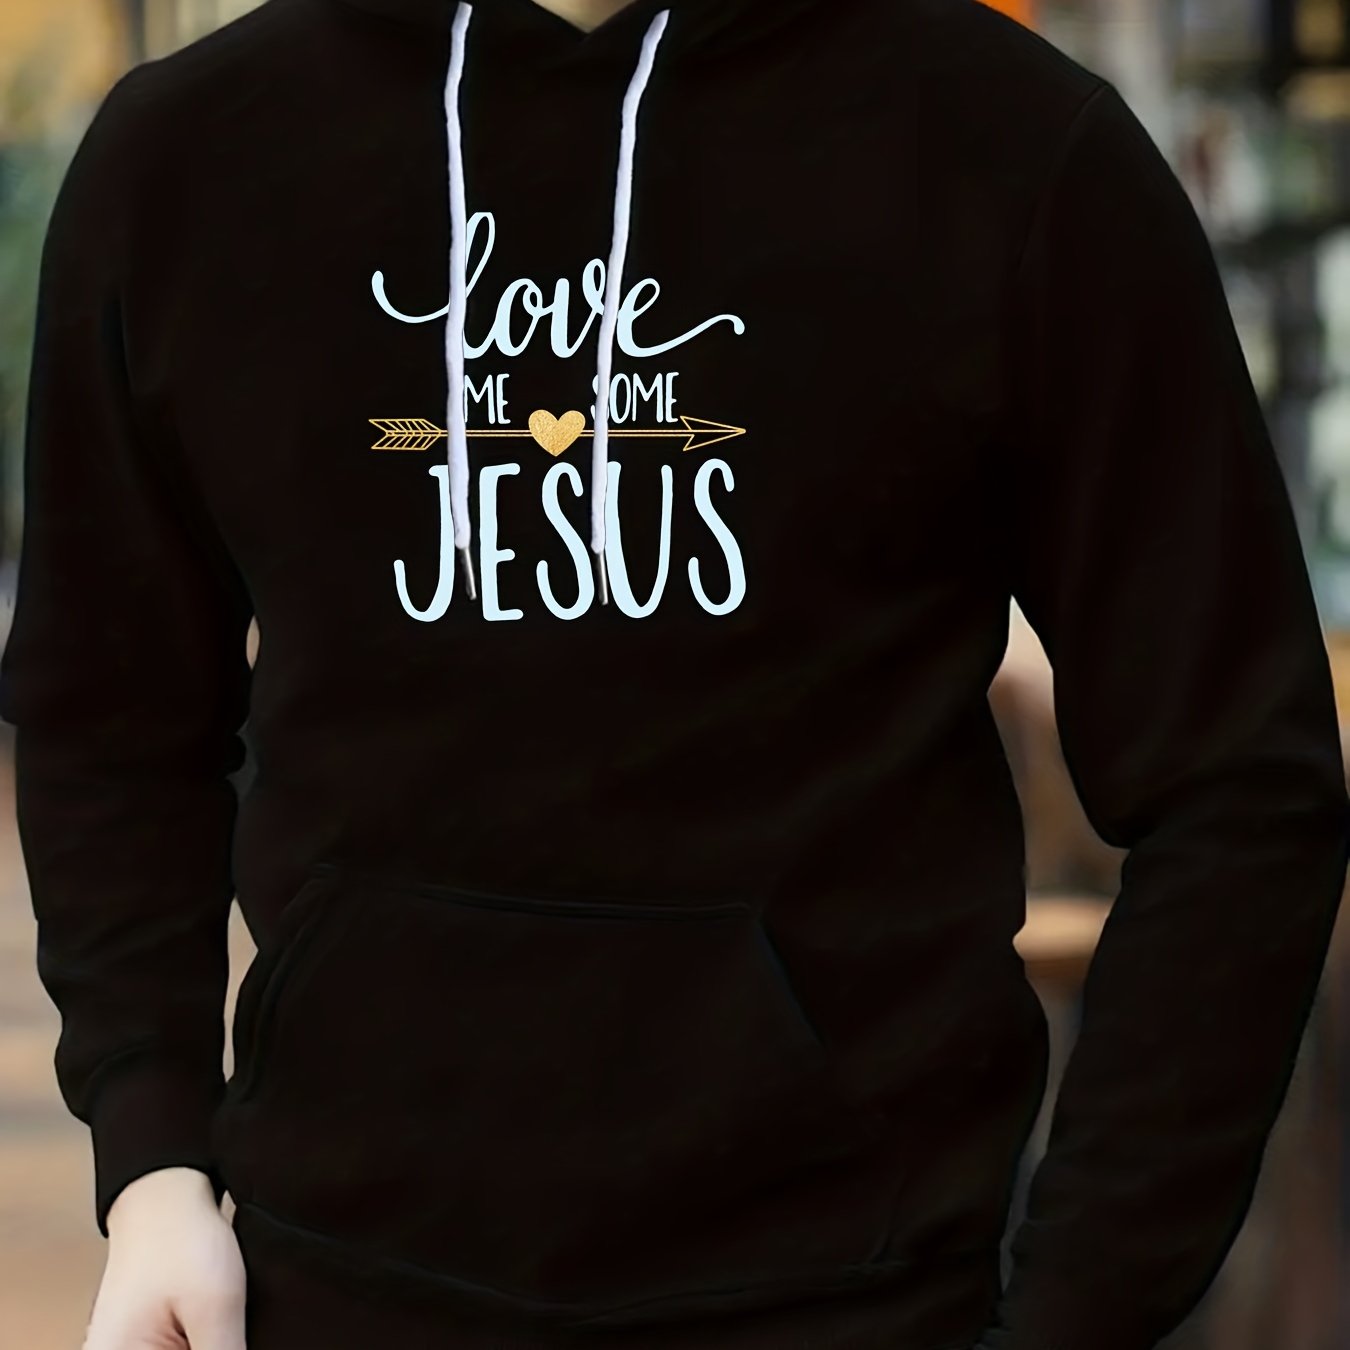 Love Me Some Jesus Men's Christian Pullover Hooded Sweatshirt claimedbygoddesigns